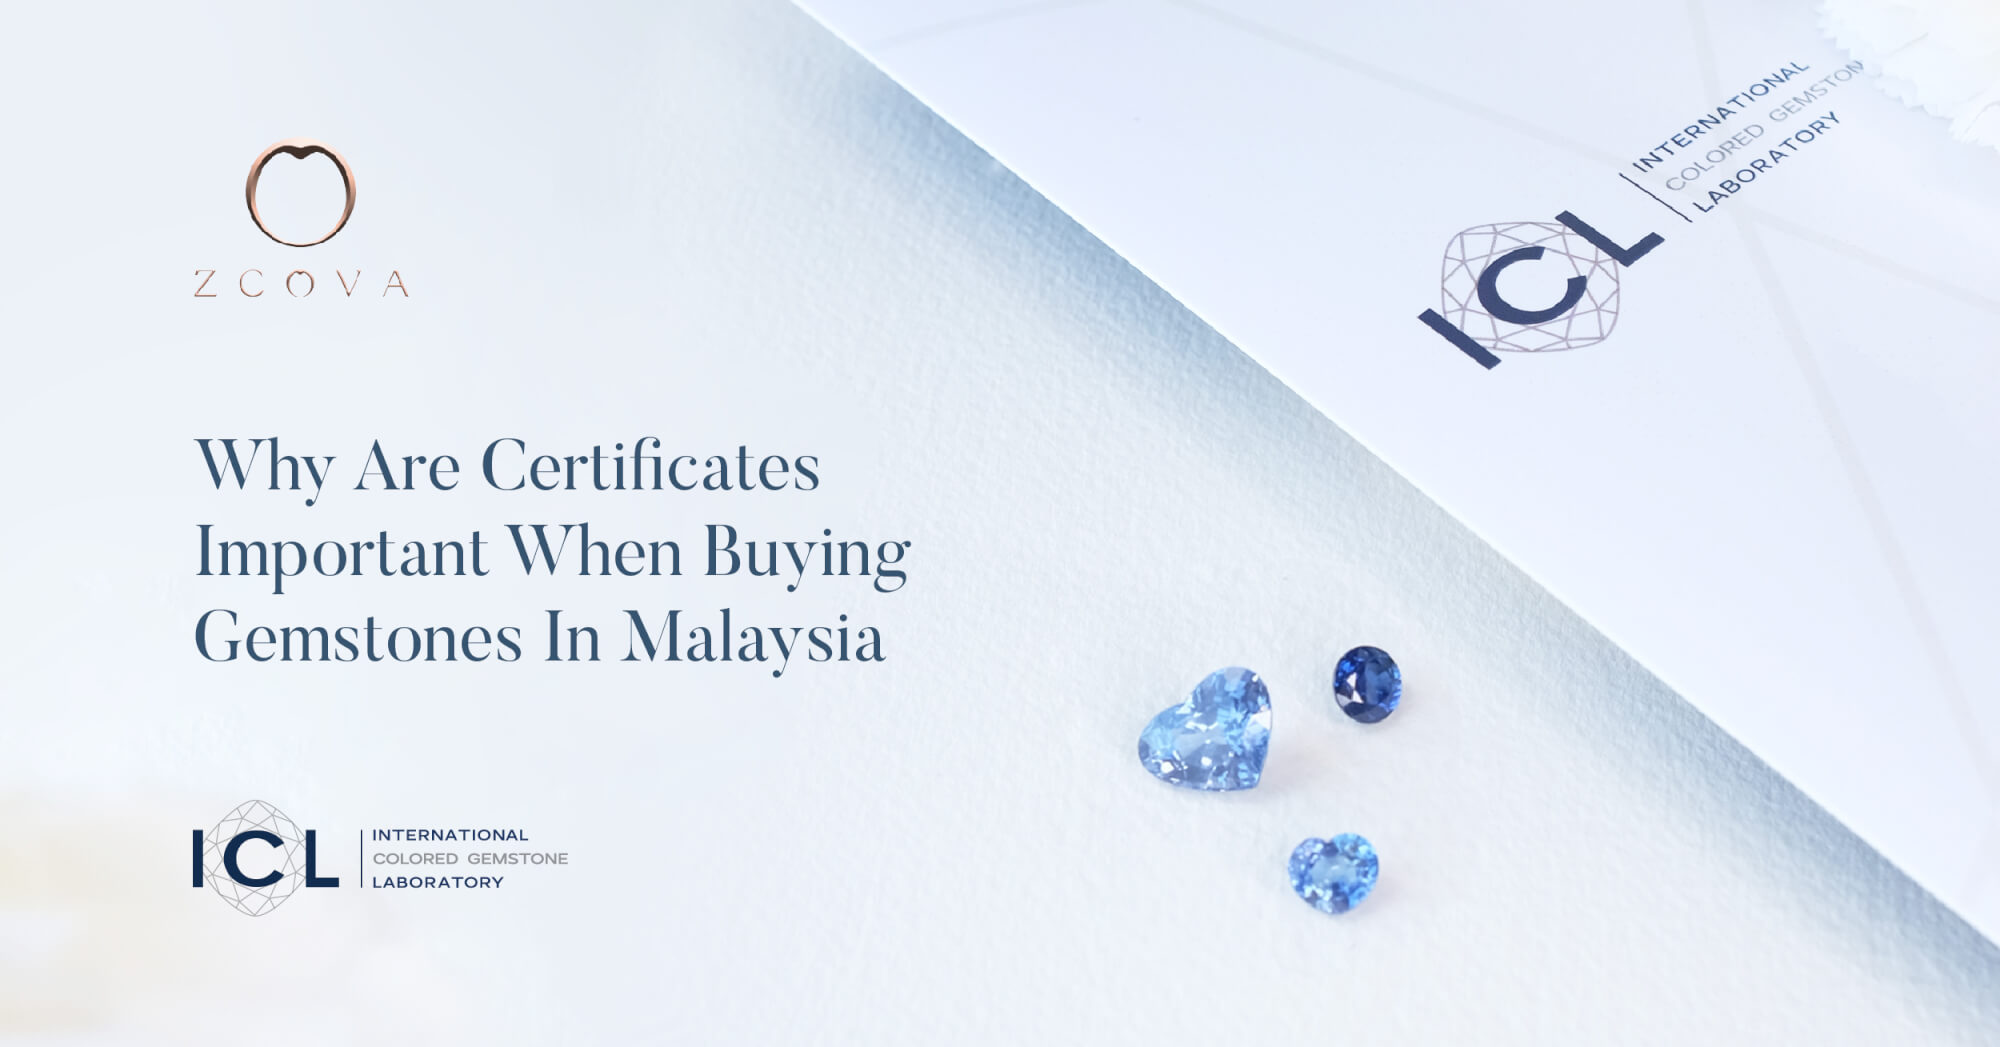 ICL Certificate for gemstones